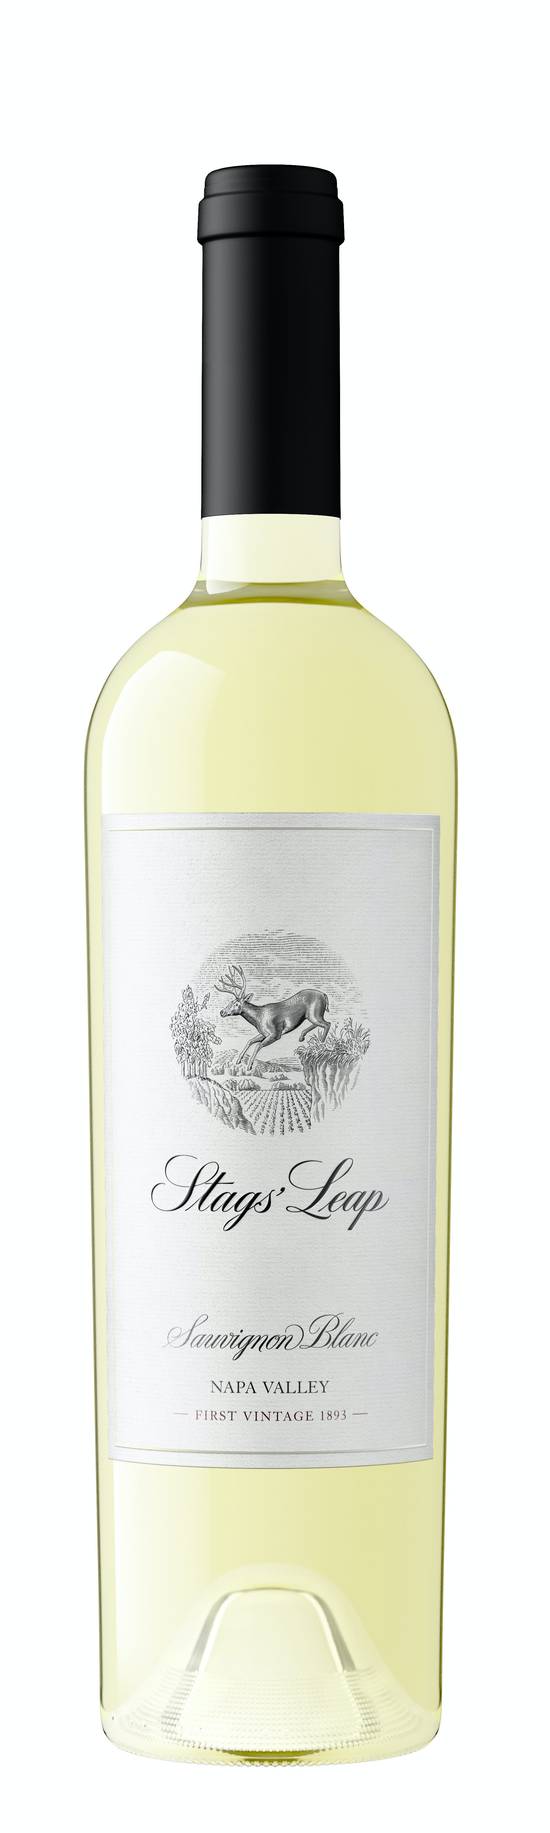 Stags' Leap Aveta Sauvignon Blanc Napa Valley Wine 2014 (750 ml)